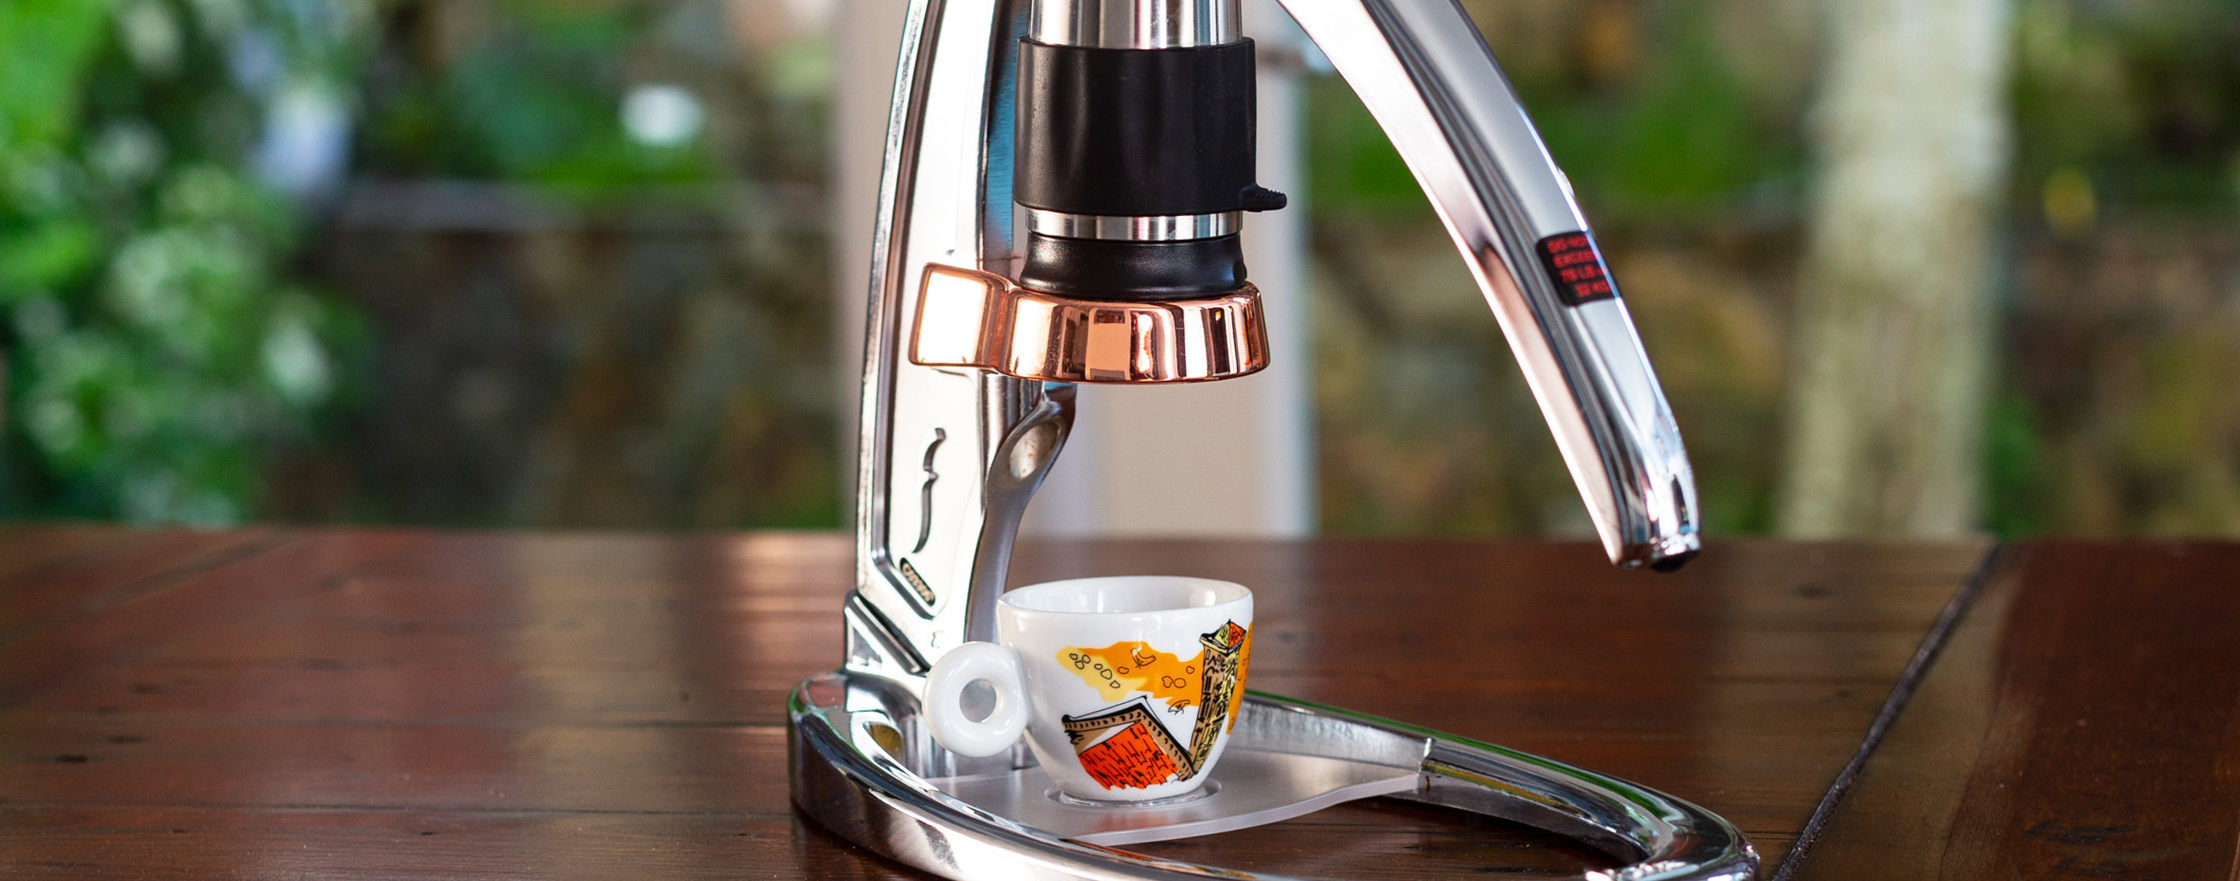  Flair Espresso Maker - Classic: All manual lever espresso maker  for the home - portable and non-electric: Home & Kitchen